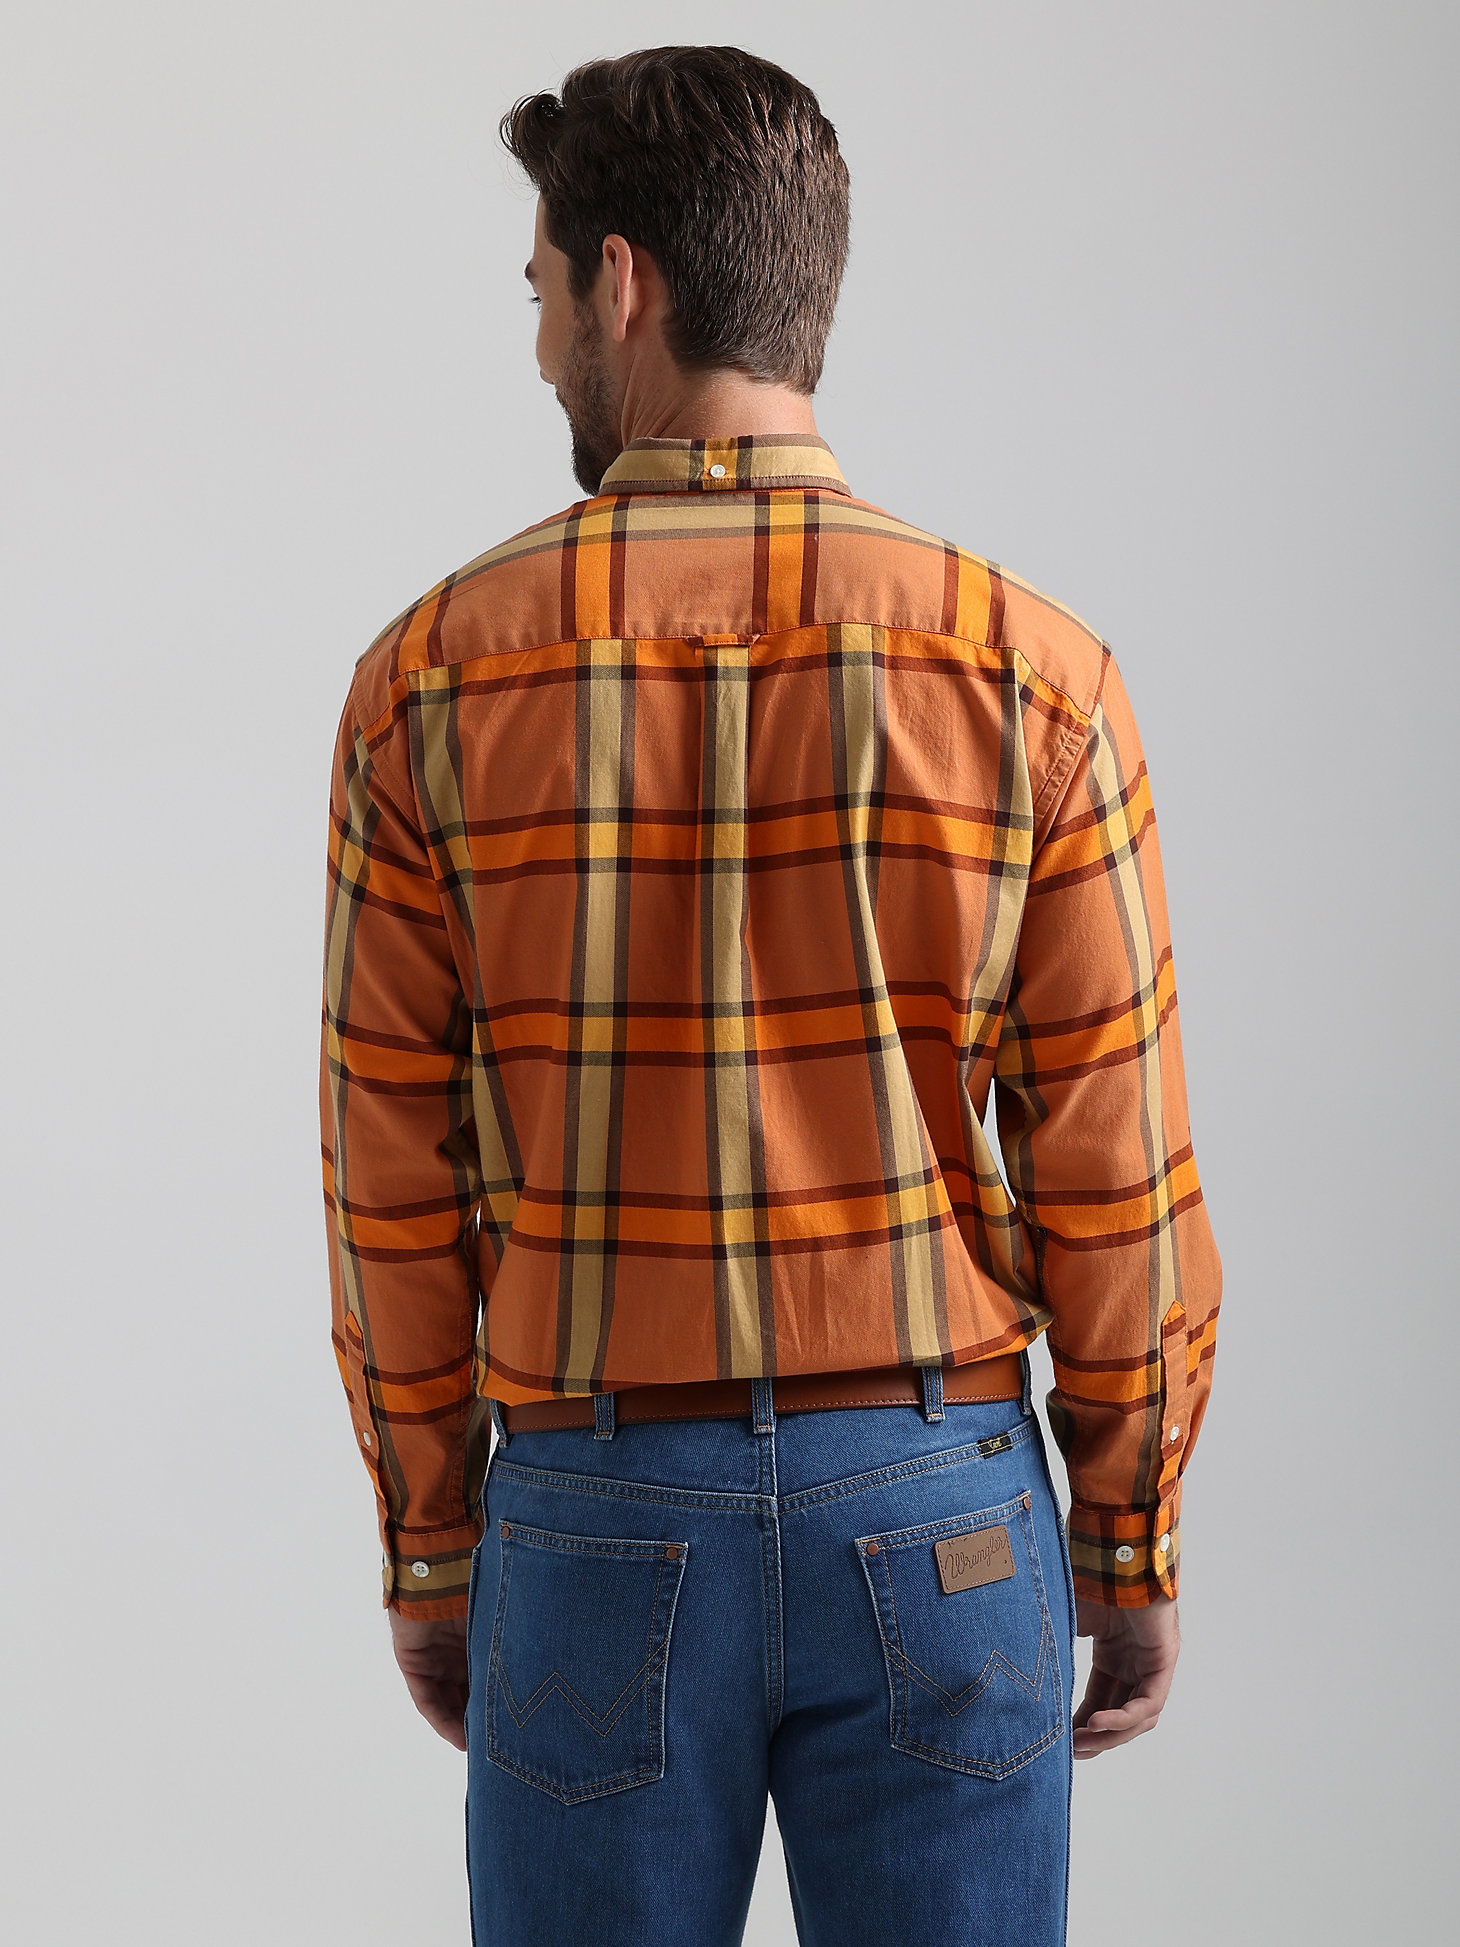 GANT Mens Plaid Oxford Shirt:Russet Orange:XS alternative view 1